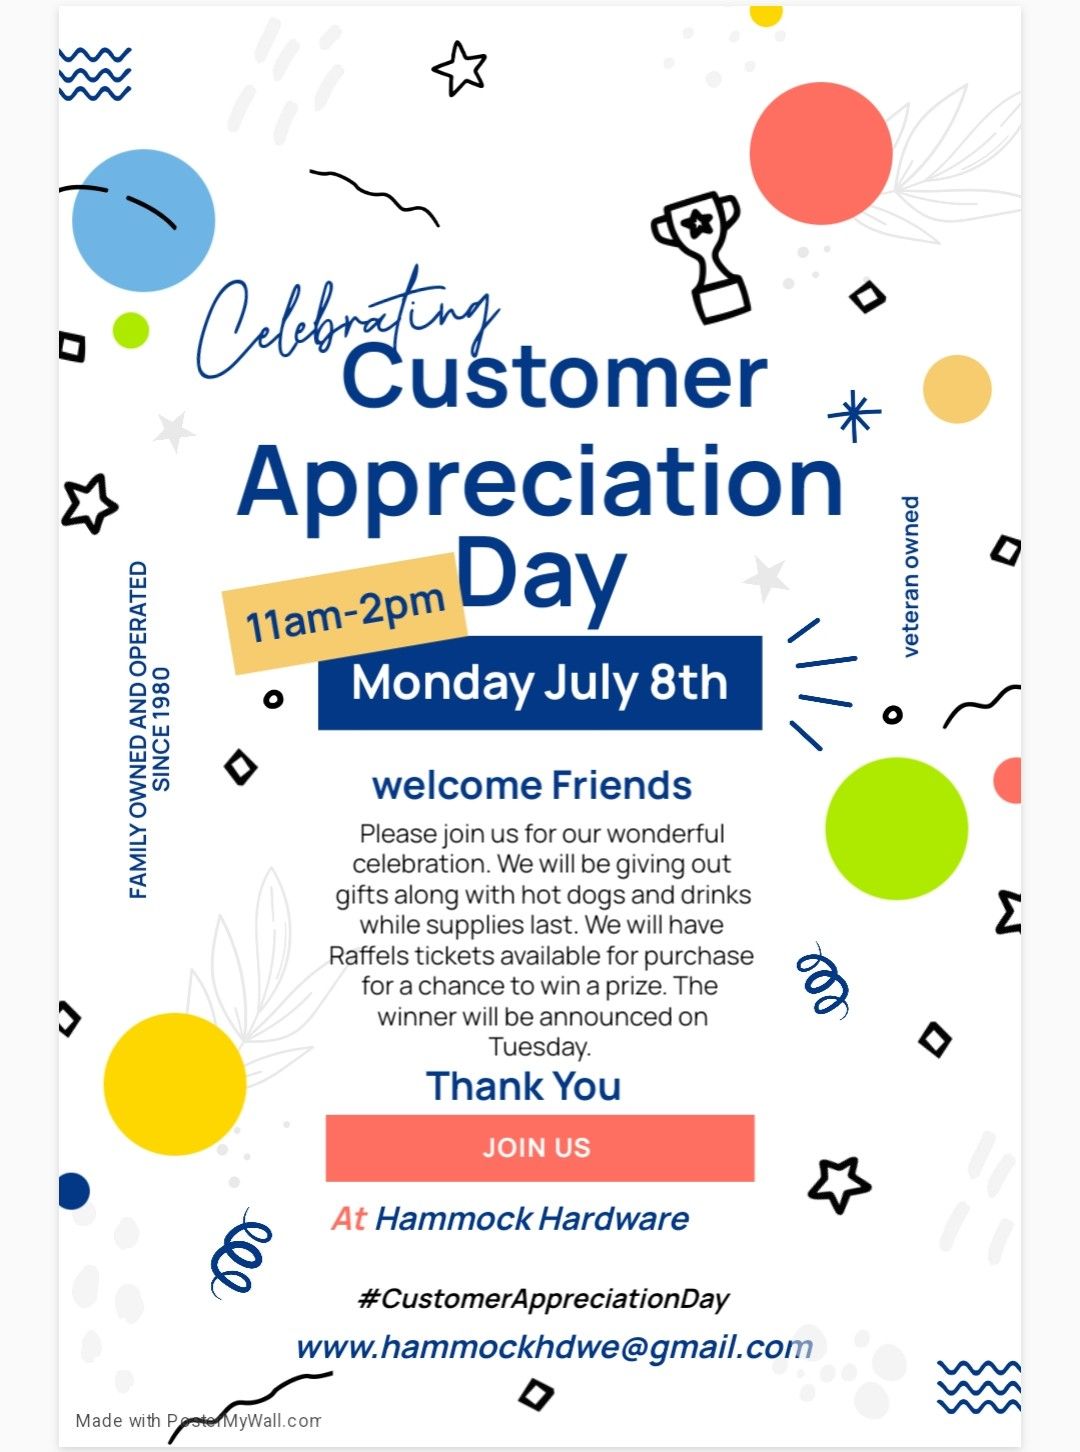 Customer Appreciation Day